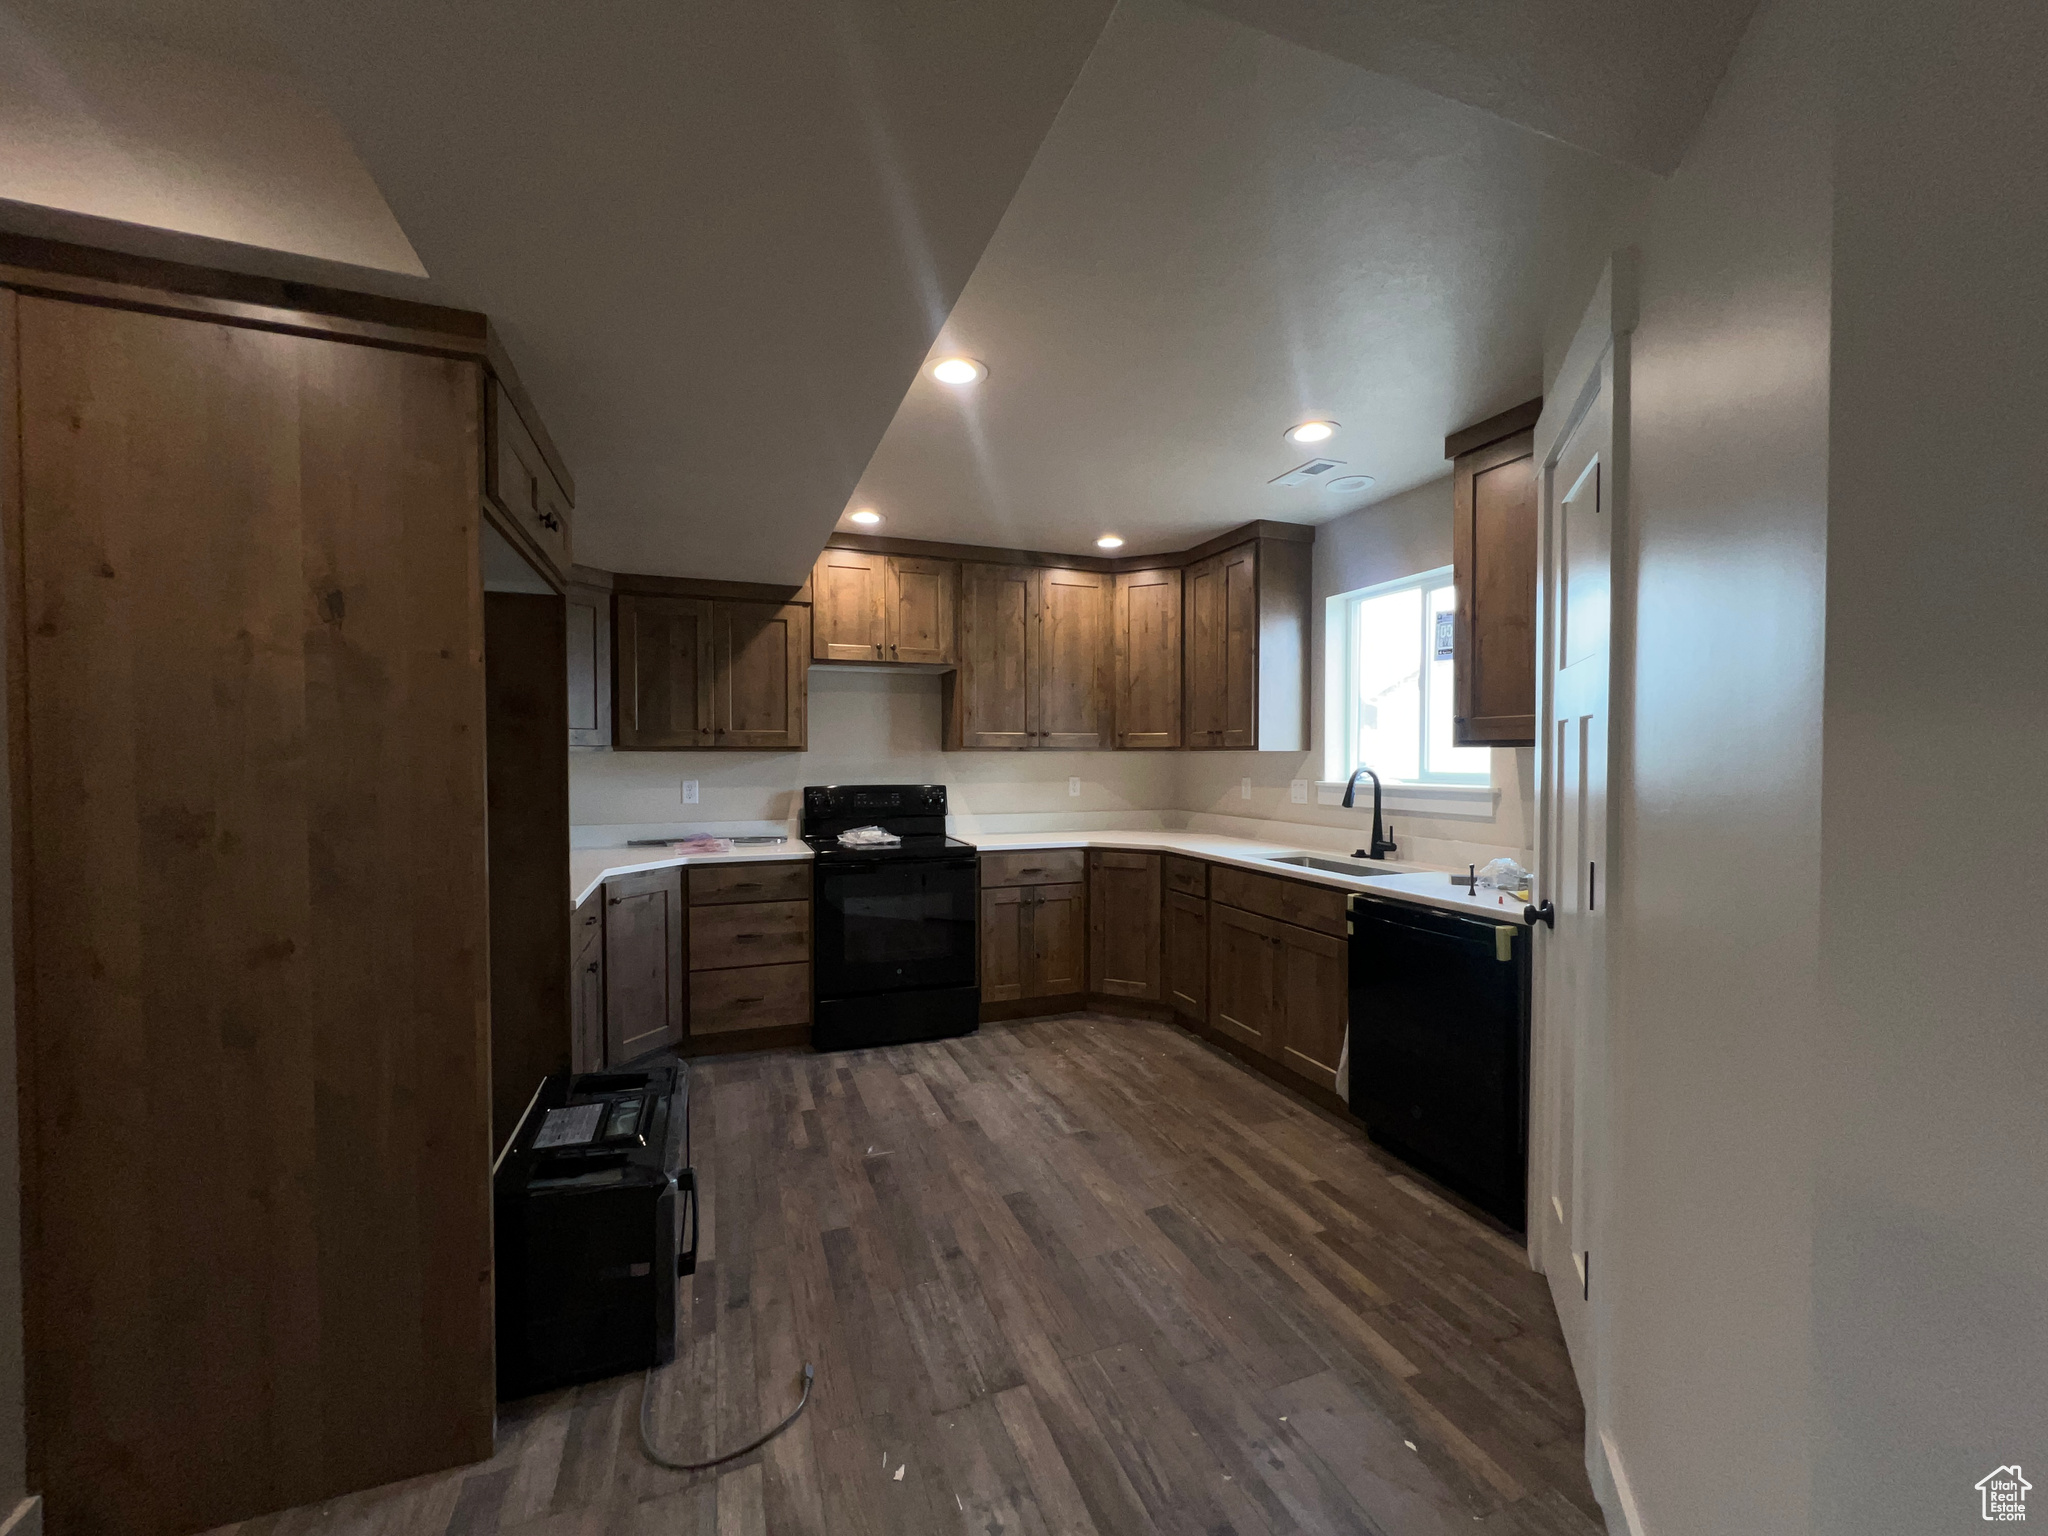 Kitchen featuring black appliances, sink, and dark hardwood / wood-style flooring